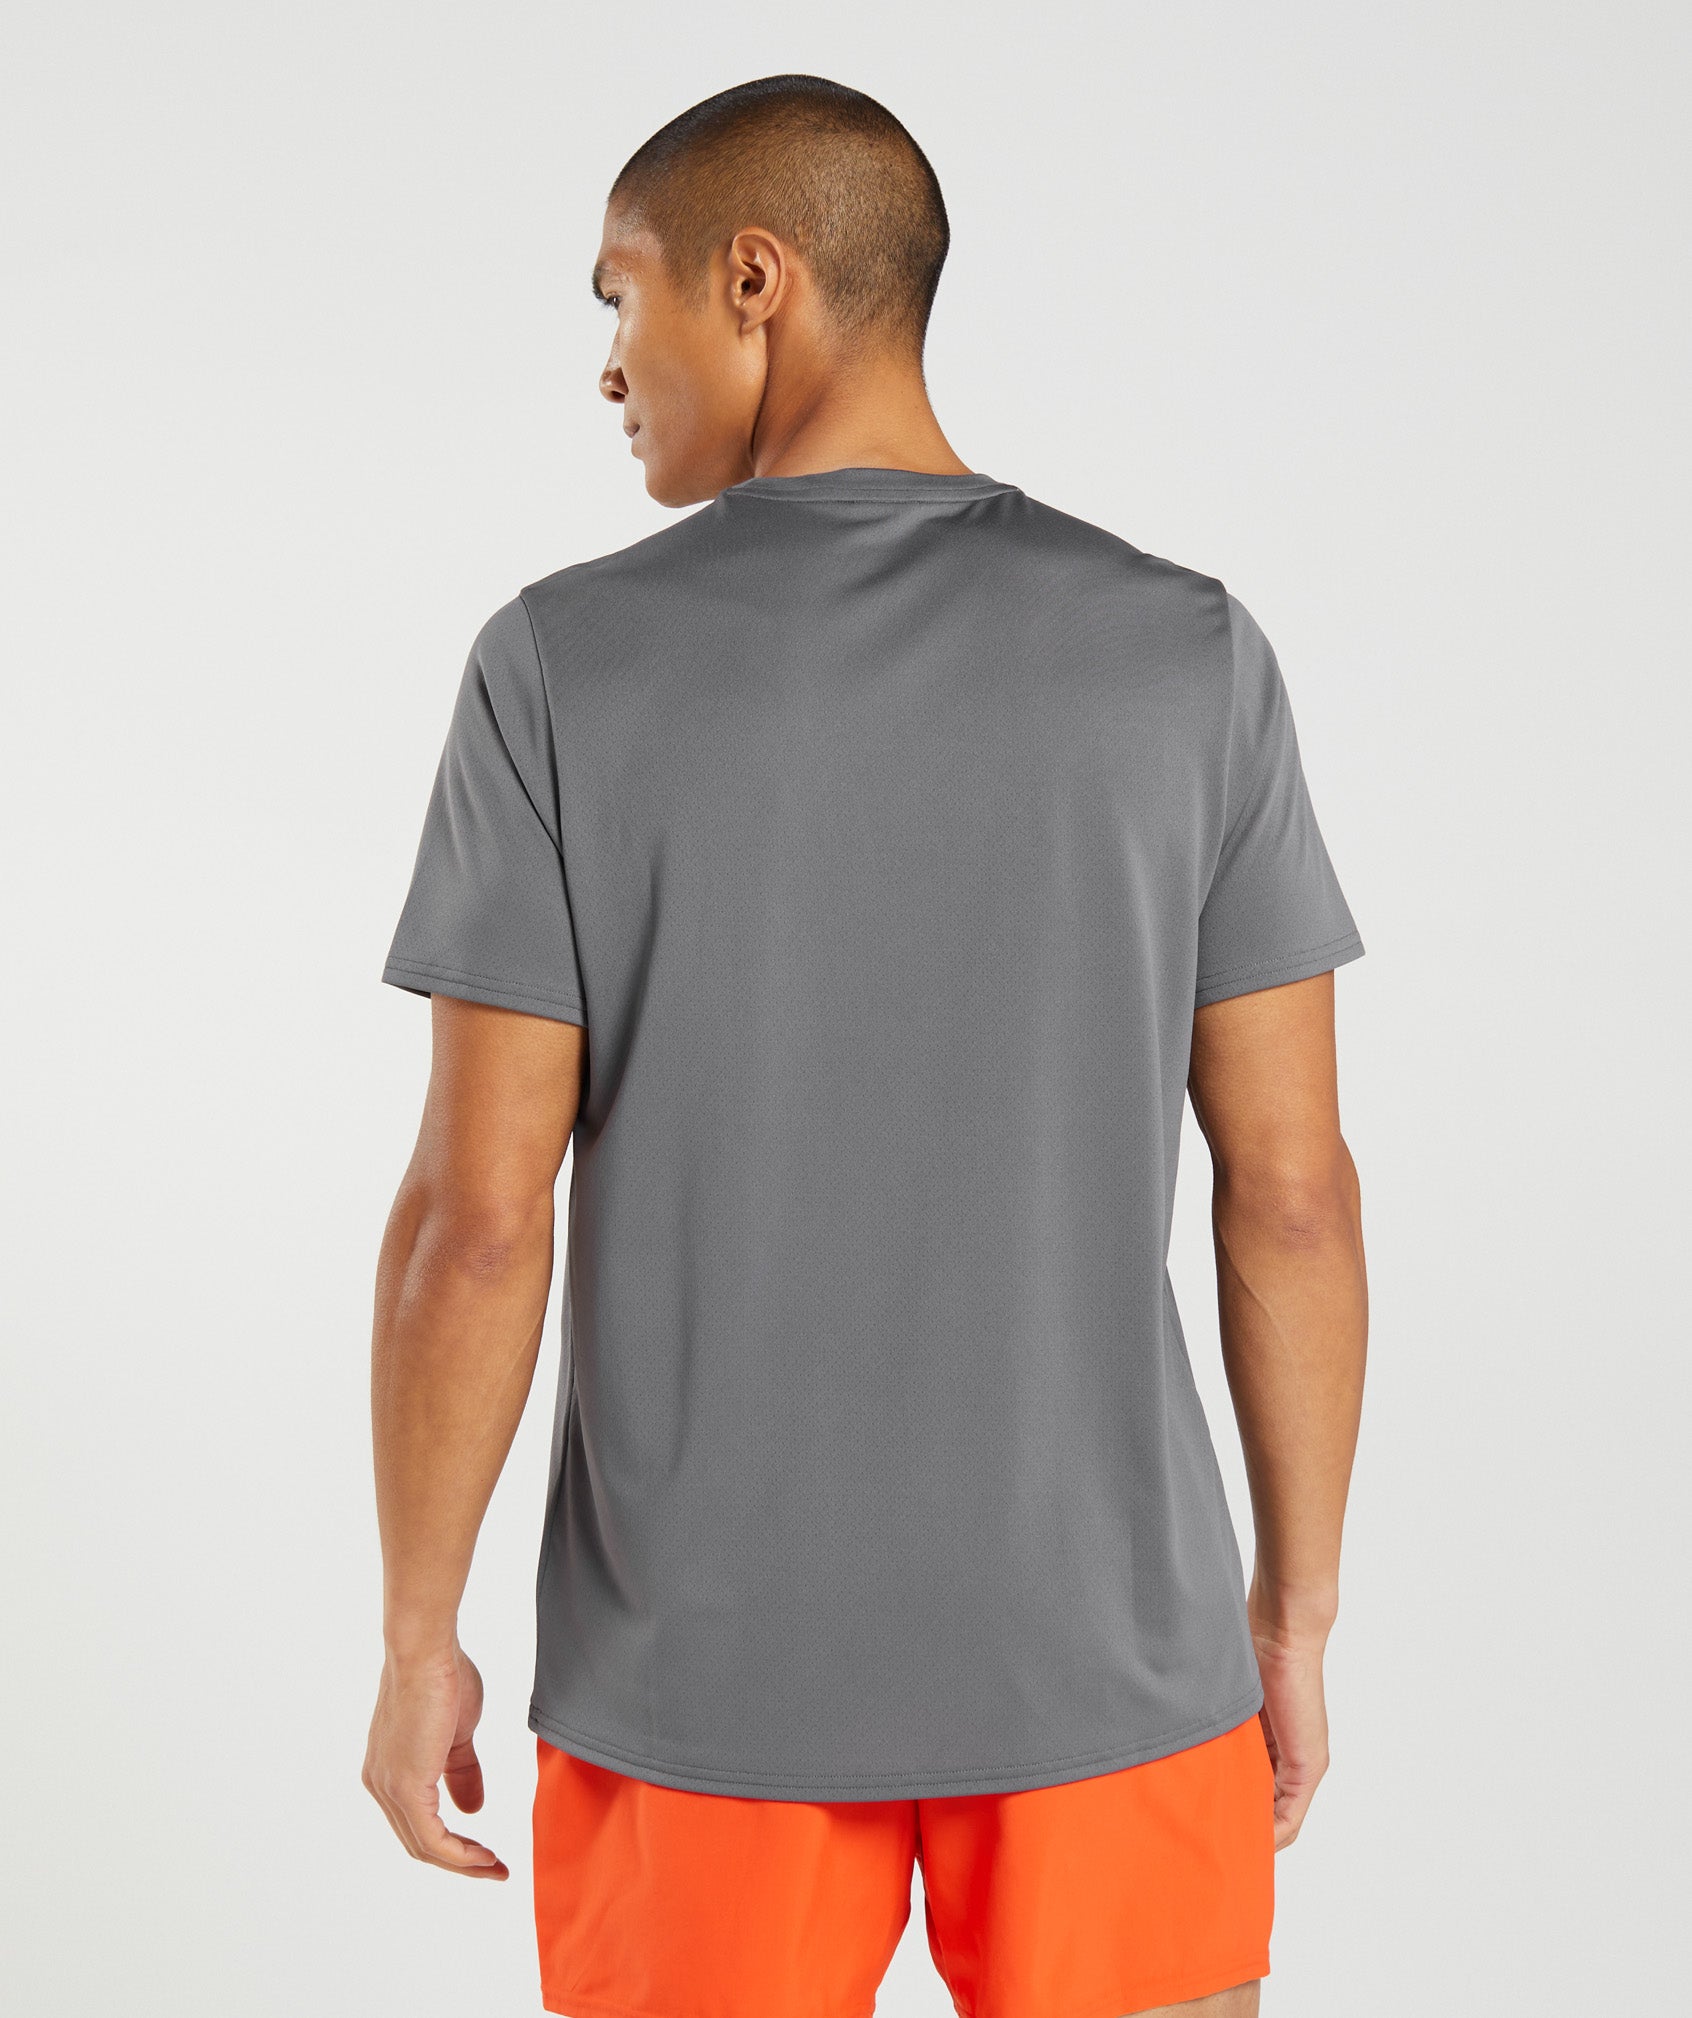 Gymshark Arrival Marl T-Shirt - Silhouette Grey/Light Grey Marl